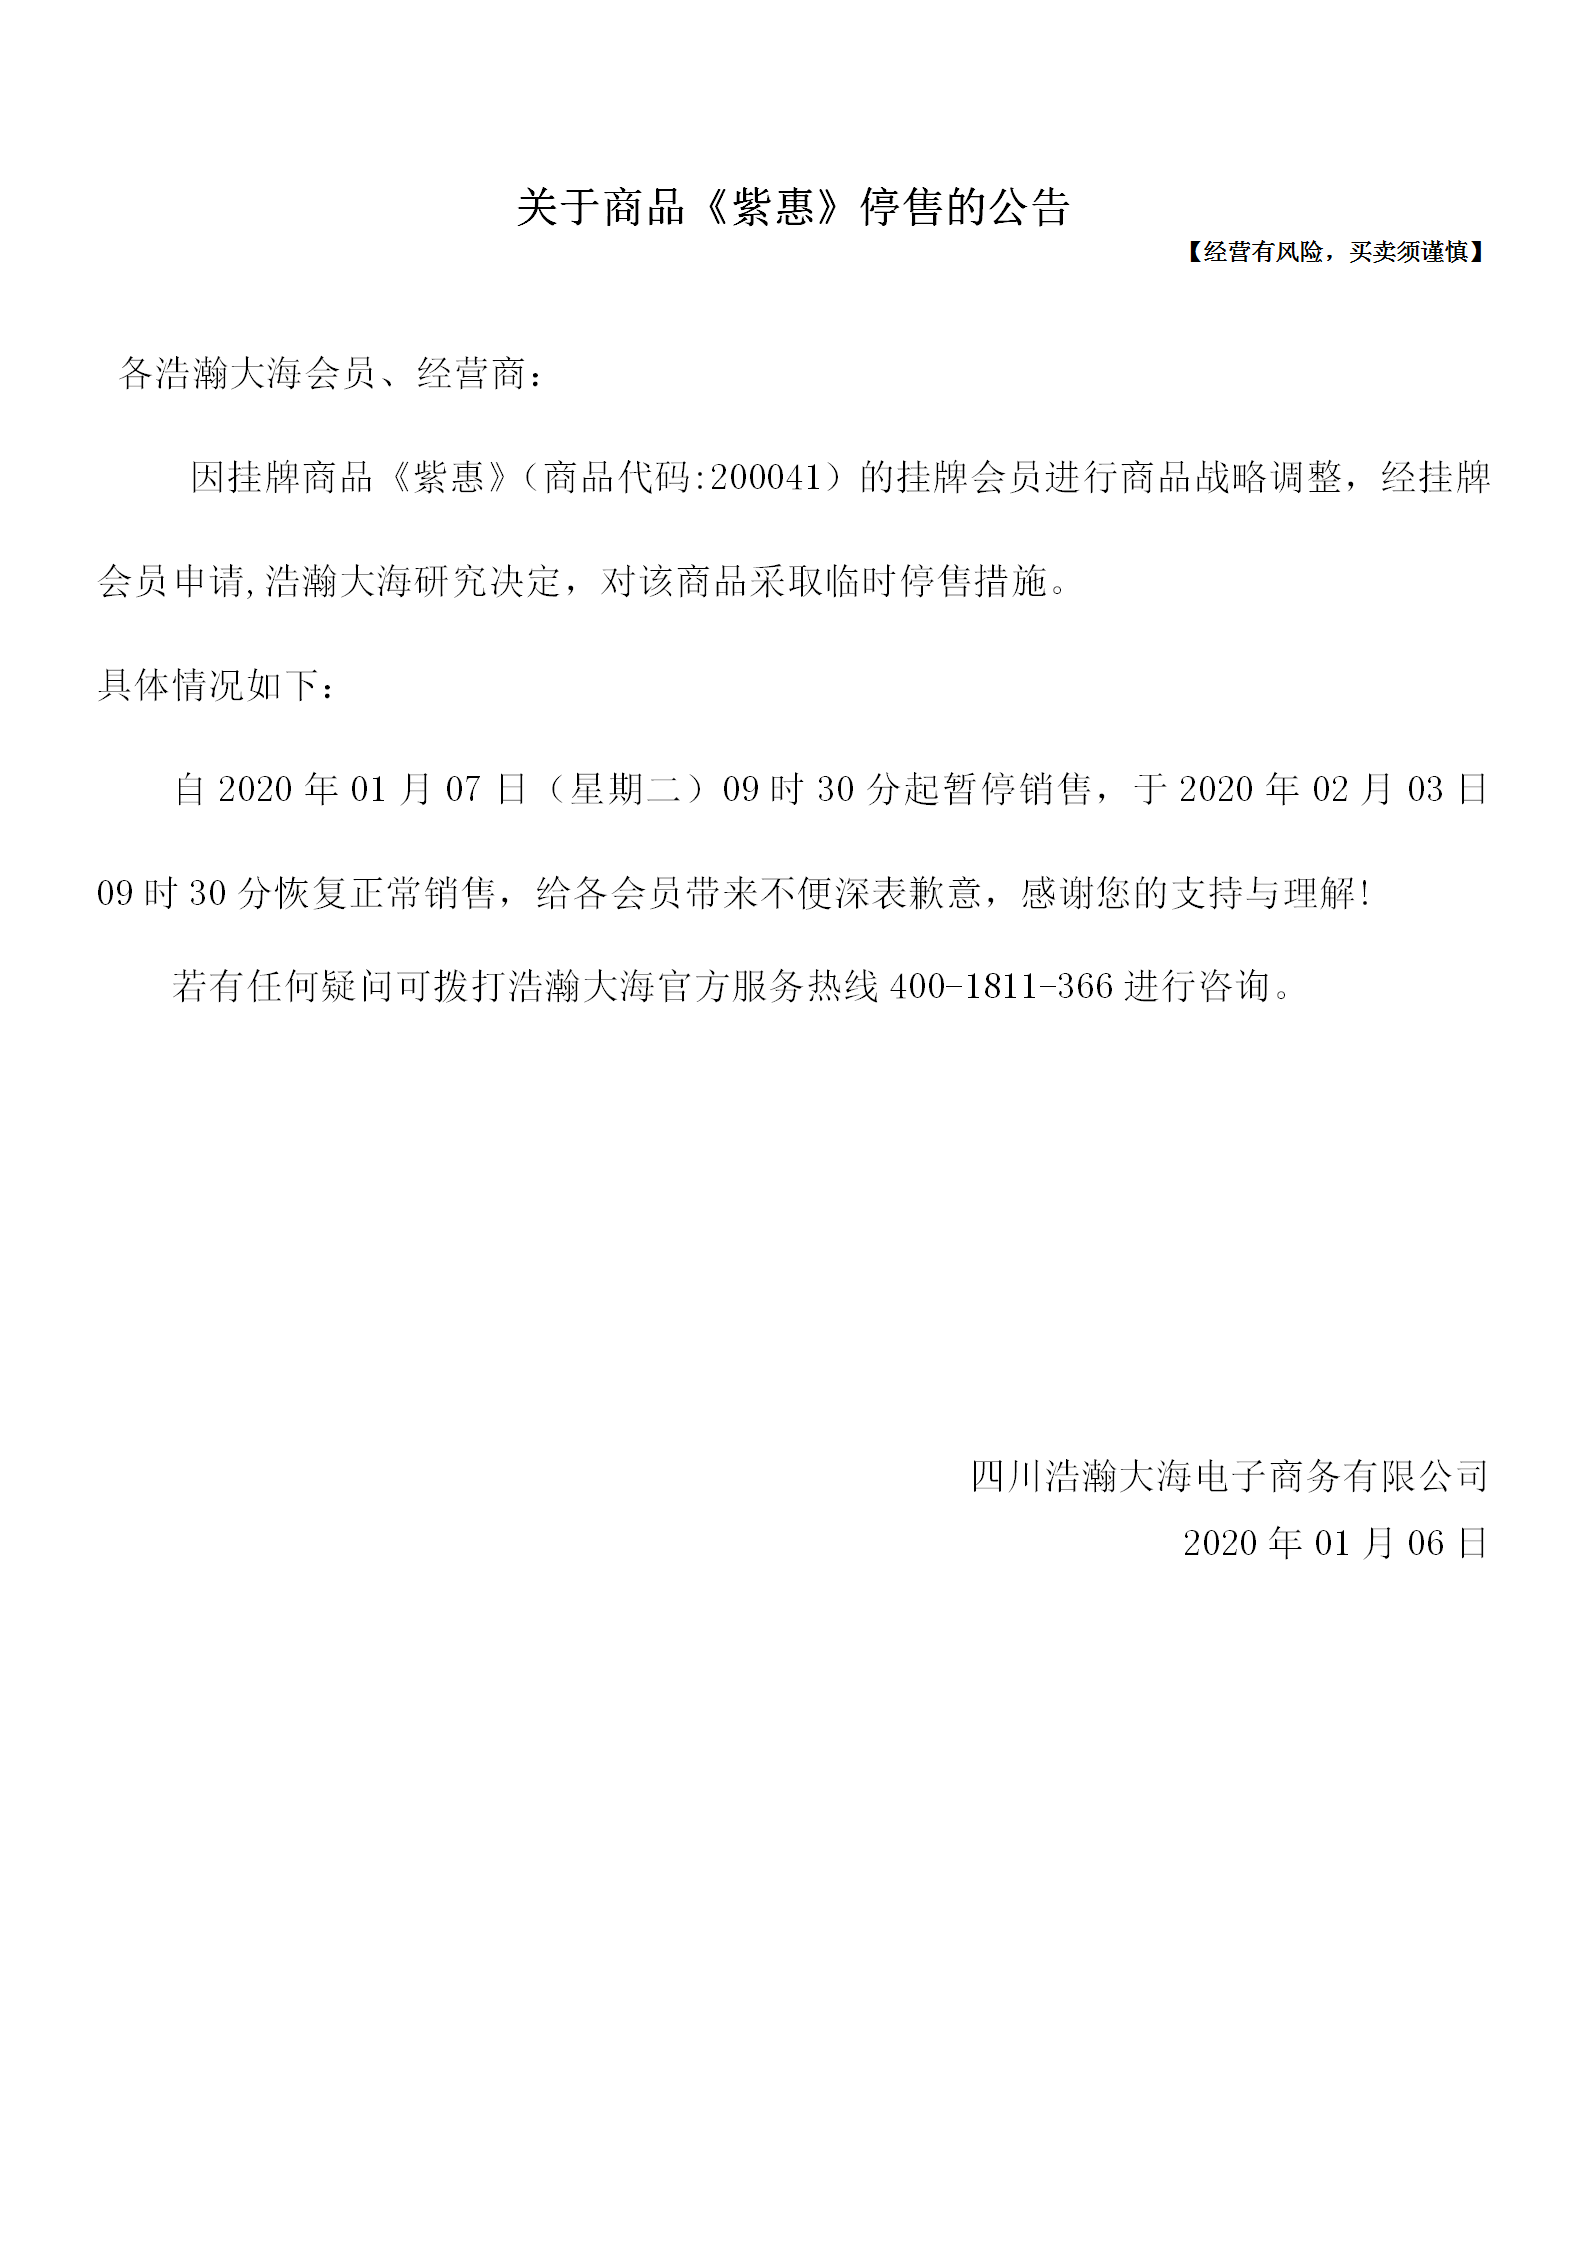 关于商品《紫惠》停售的公告(1月6日).png